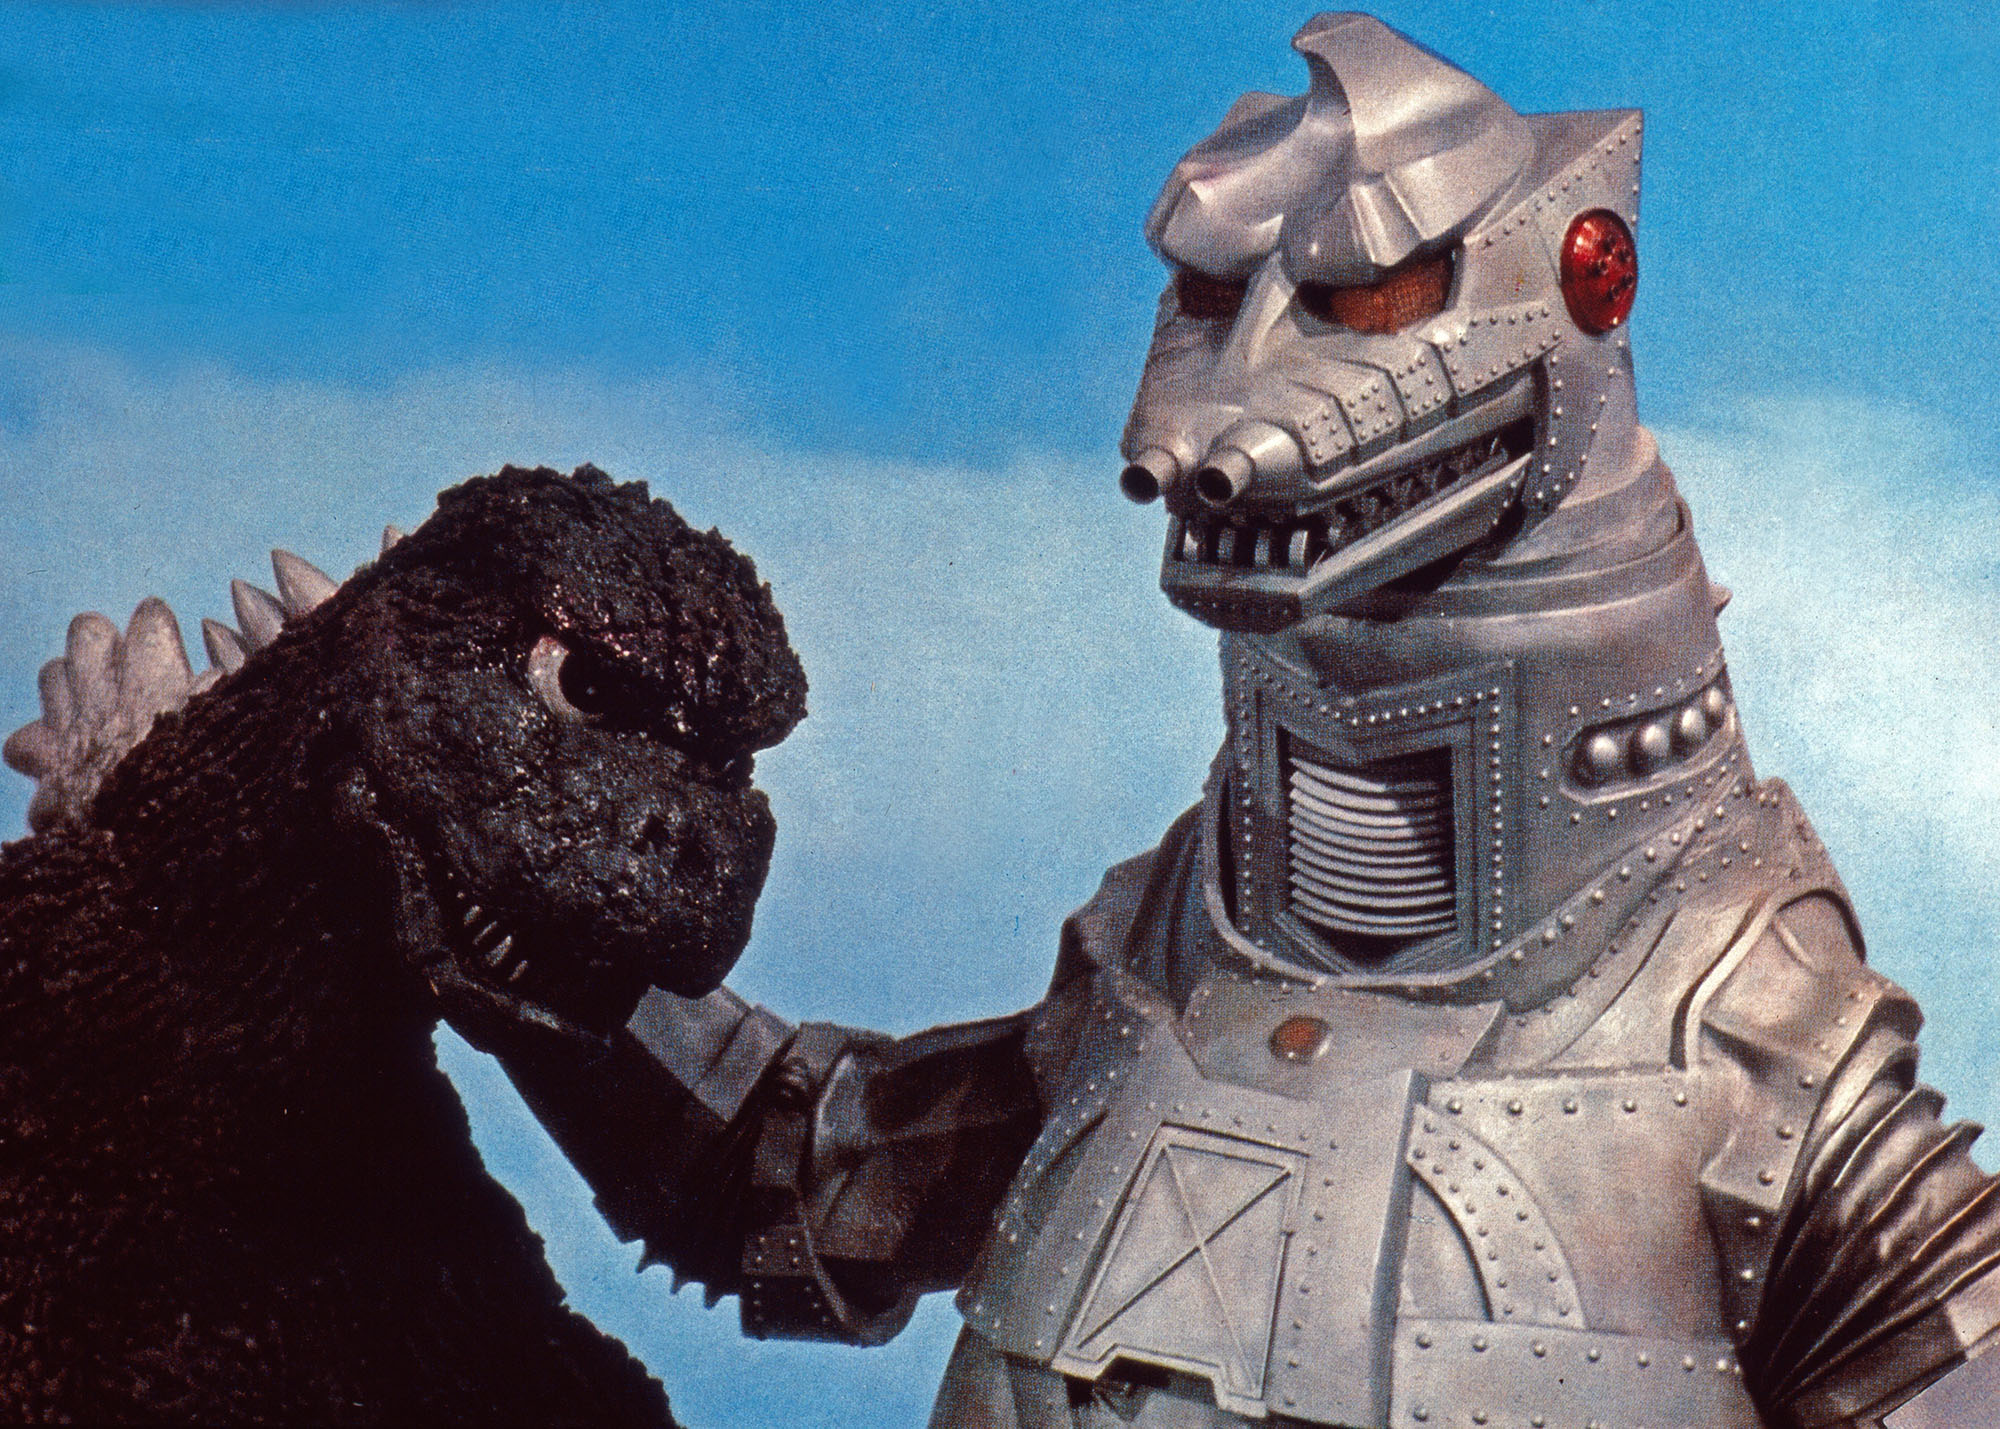 image from the 1974 movie "Godzilla vs. Mechagodzilla." It features closeup headshots of Godzilla, on the left, and Mechagodzilla, on the right, grappling with each other against a blue sky background.